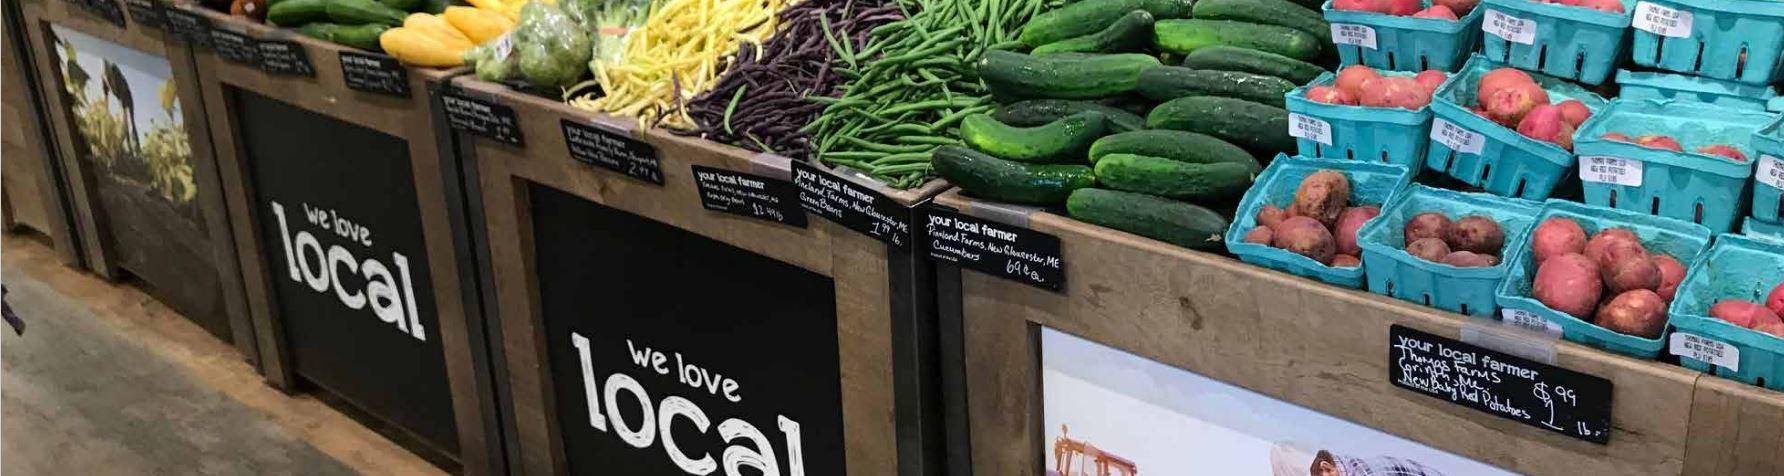 consumer-demand-4-photo-local-vegetables